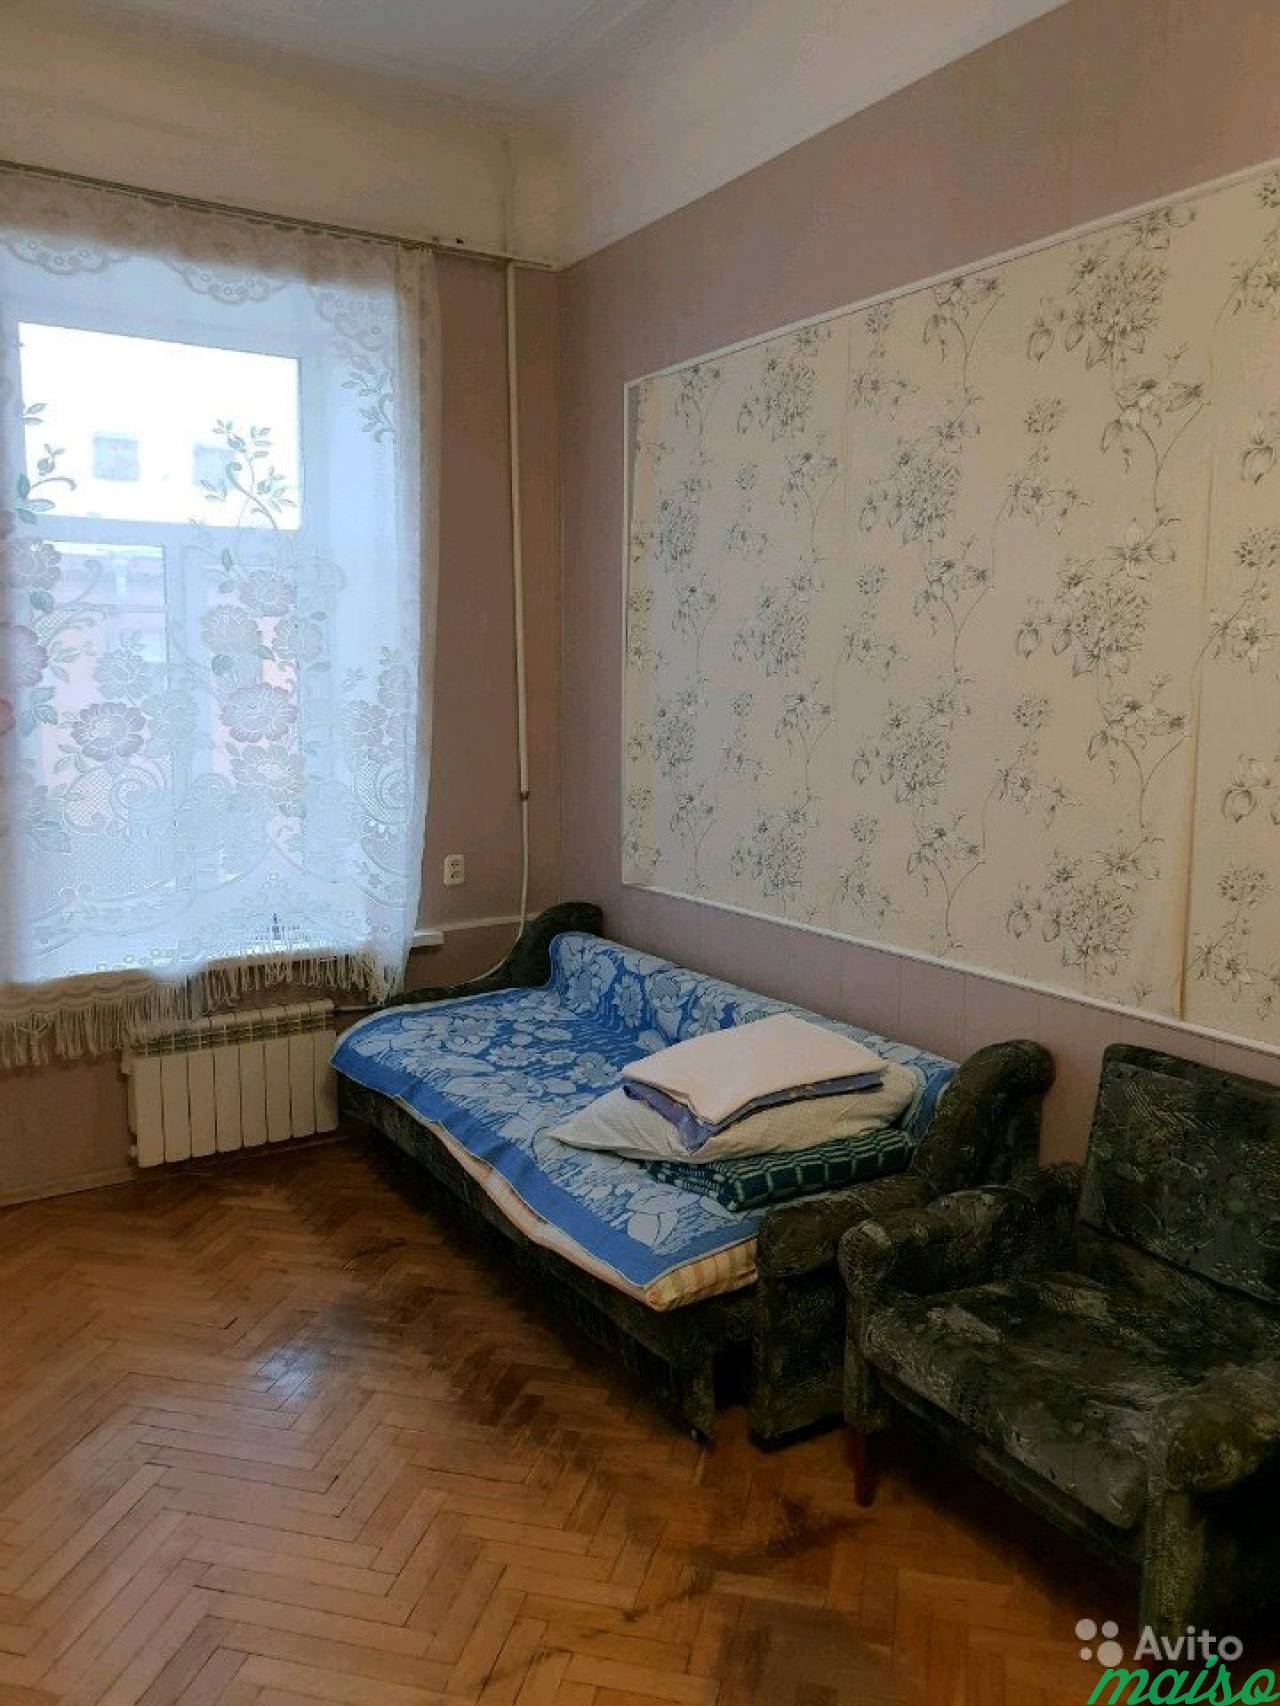 Комната 26 м² в 4-к, 4/6 эт. в Санкт-Петербурге. Фото 1